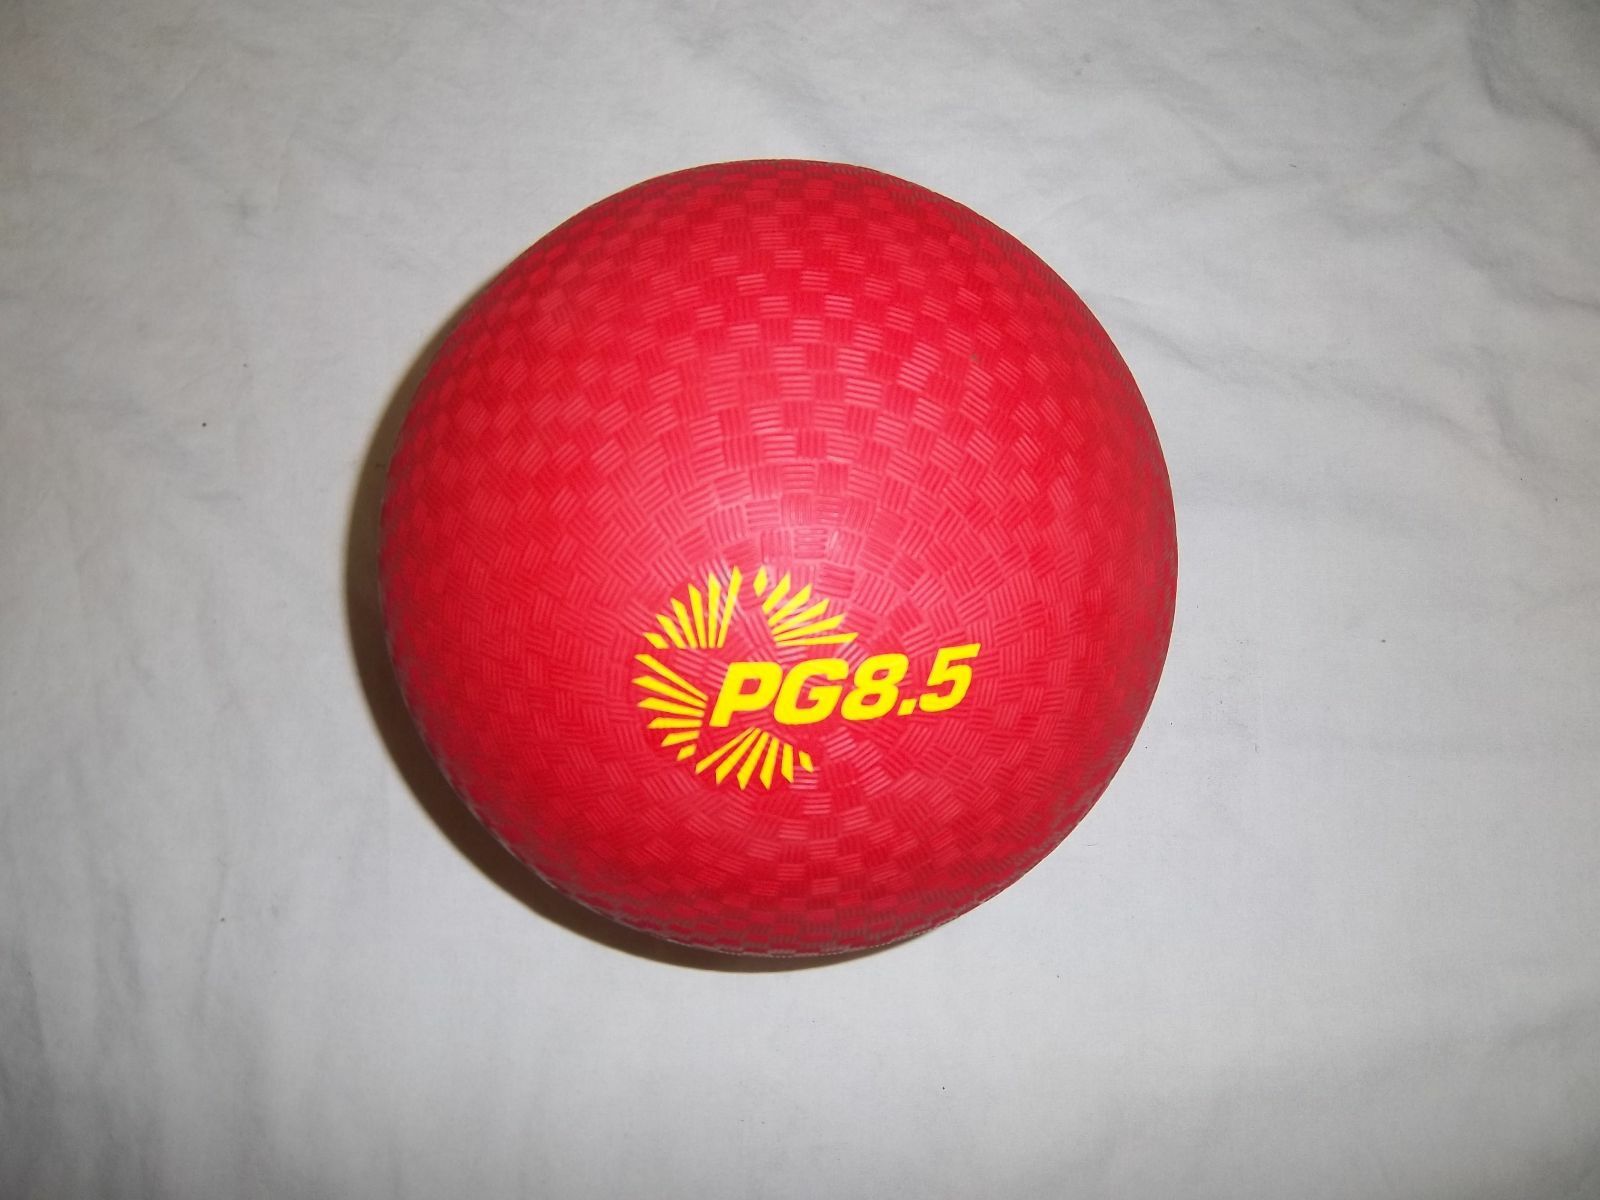 CHAMPION SPORTS PG8.5 RED PLAYGROUND BALL